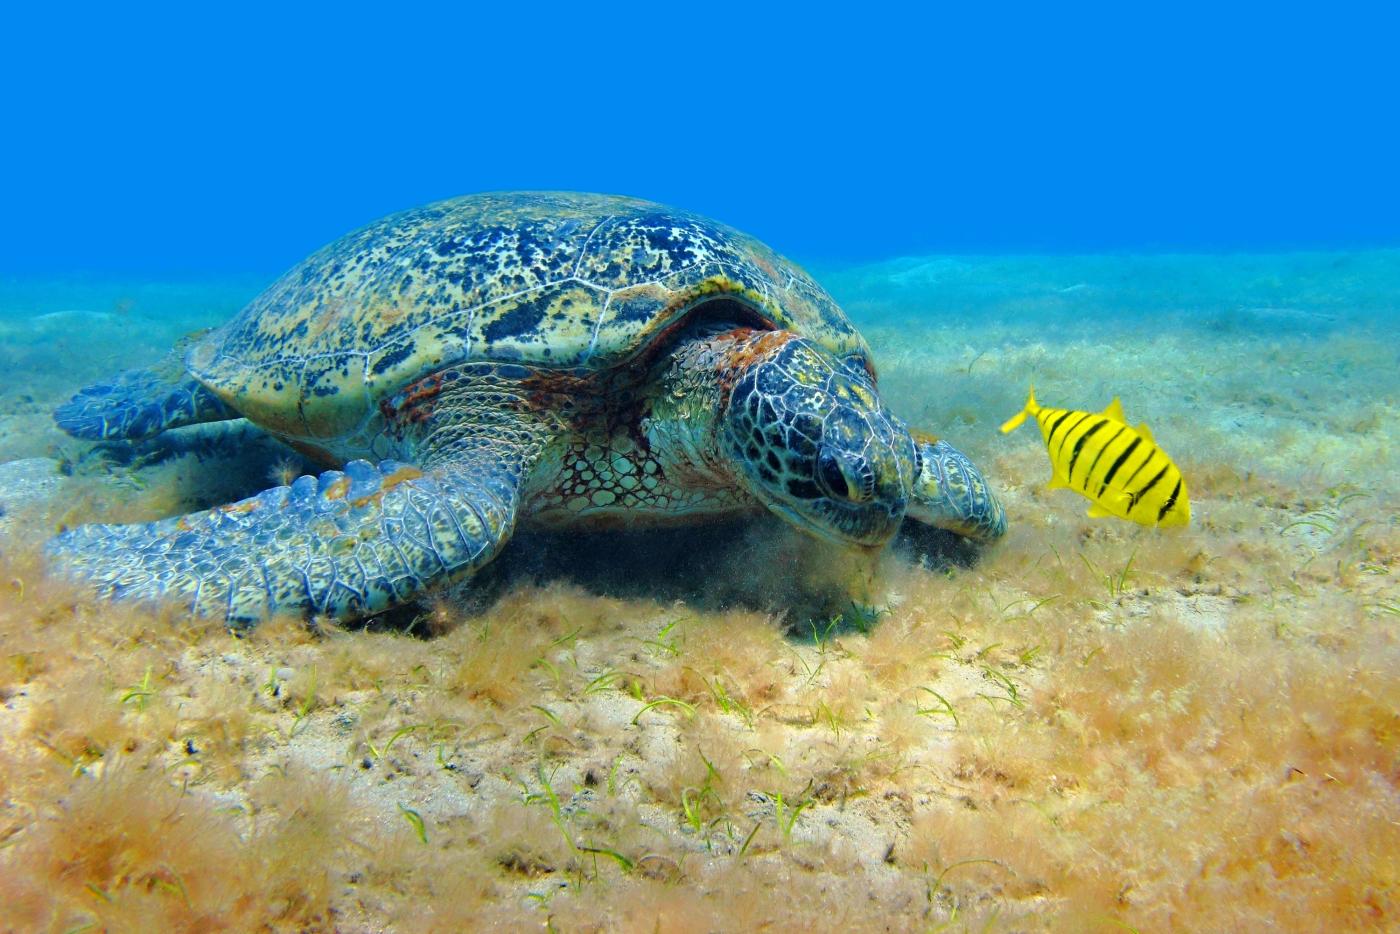 Scuba diving with the sea turtles, Abu Dabbab bay, Marsa Alam.